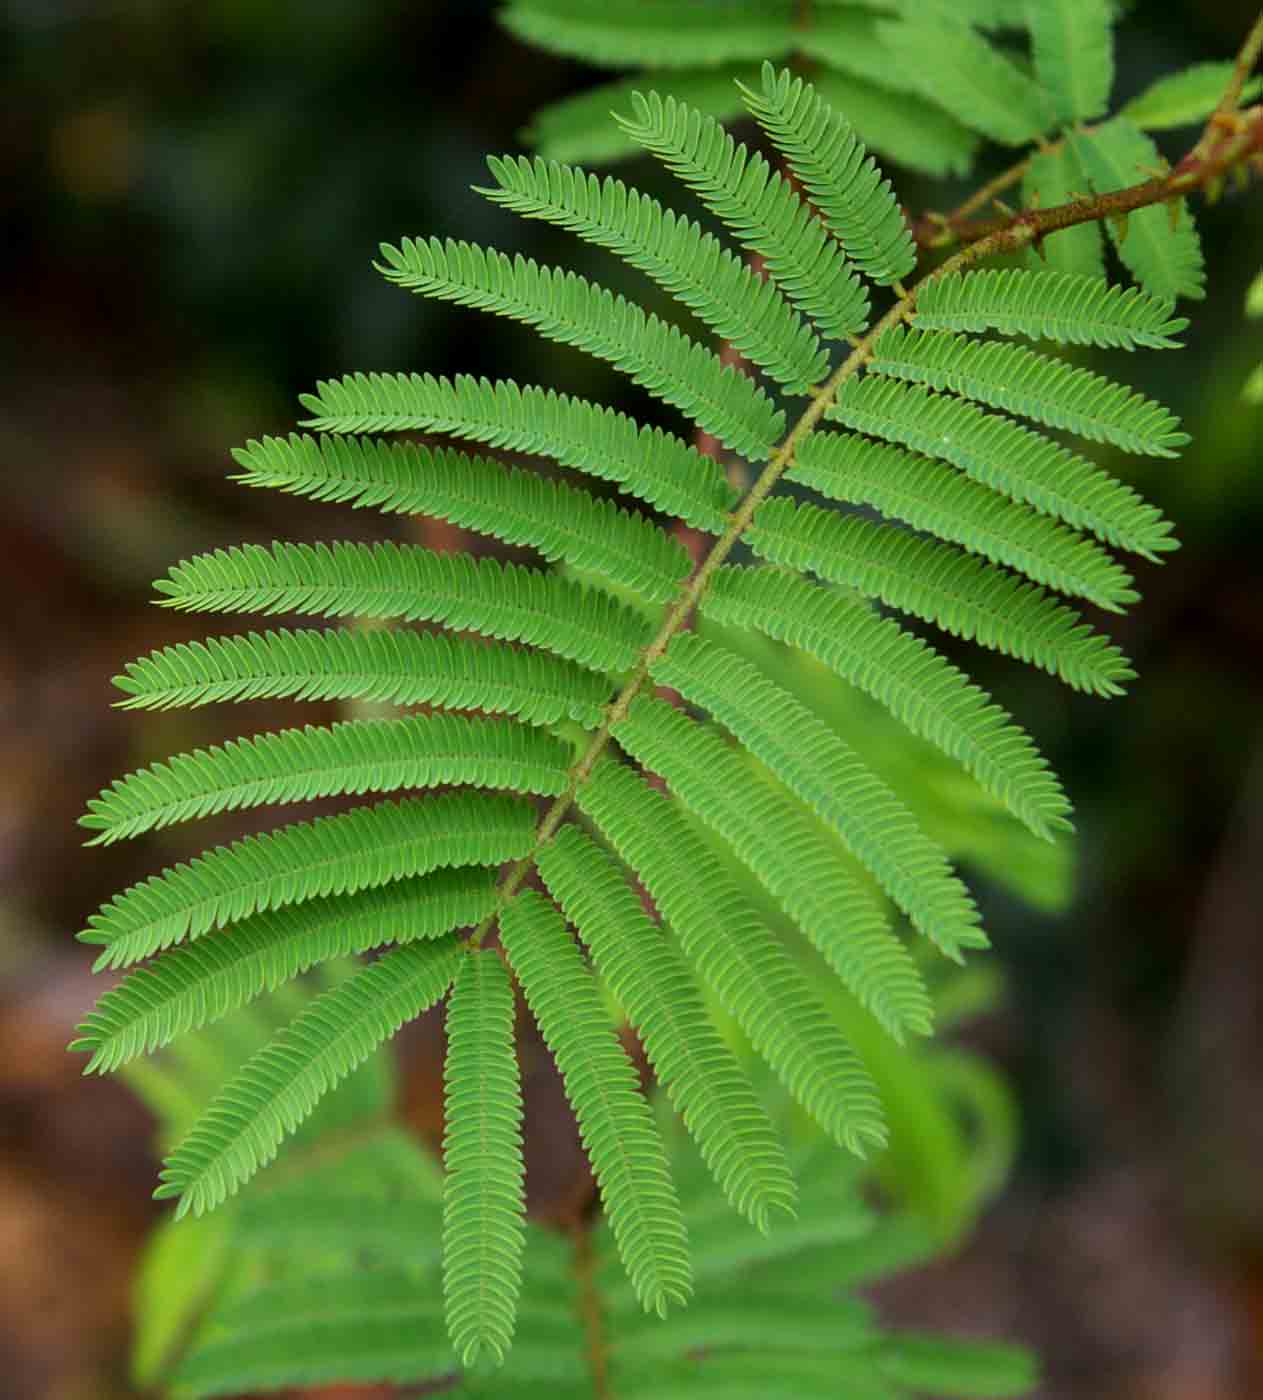 Acacia adenocalyx